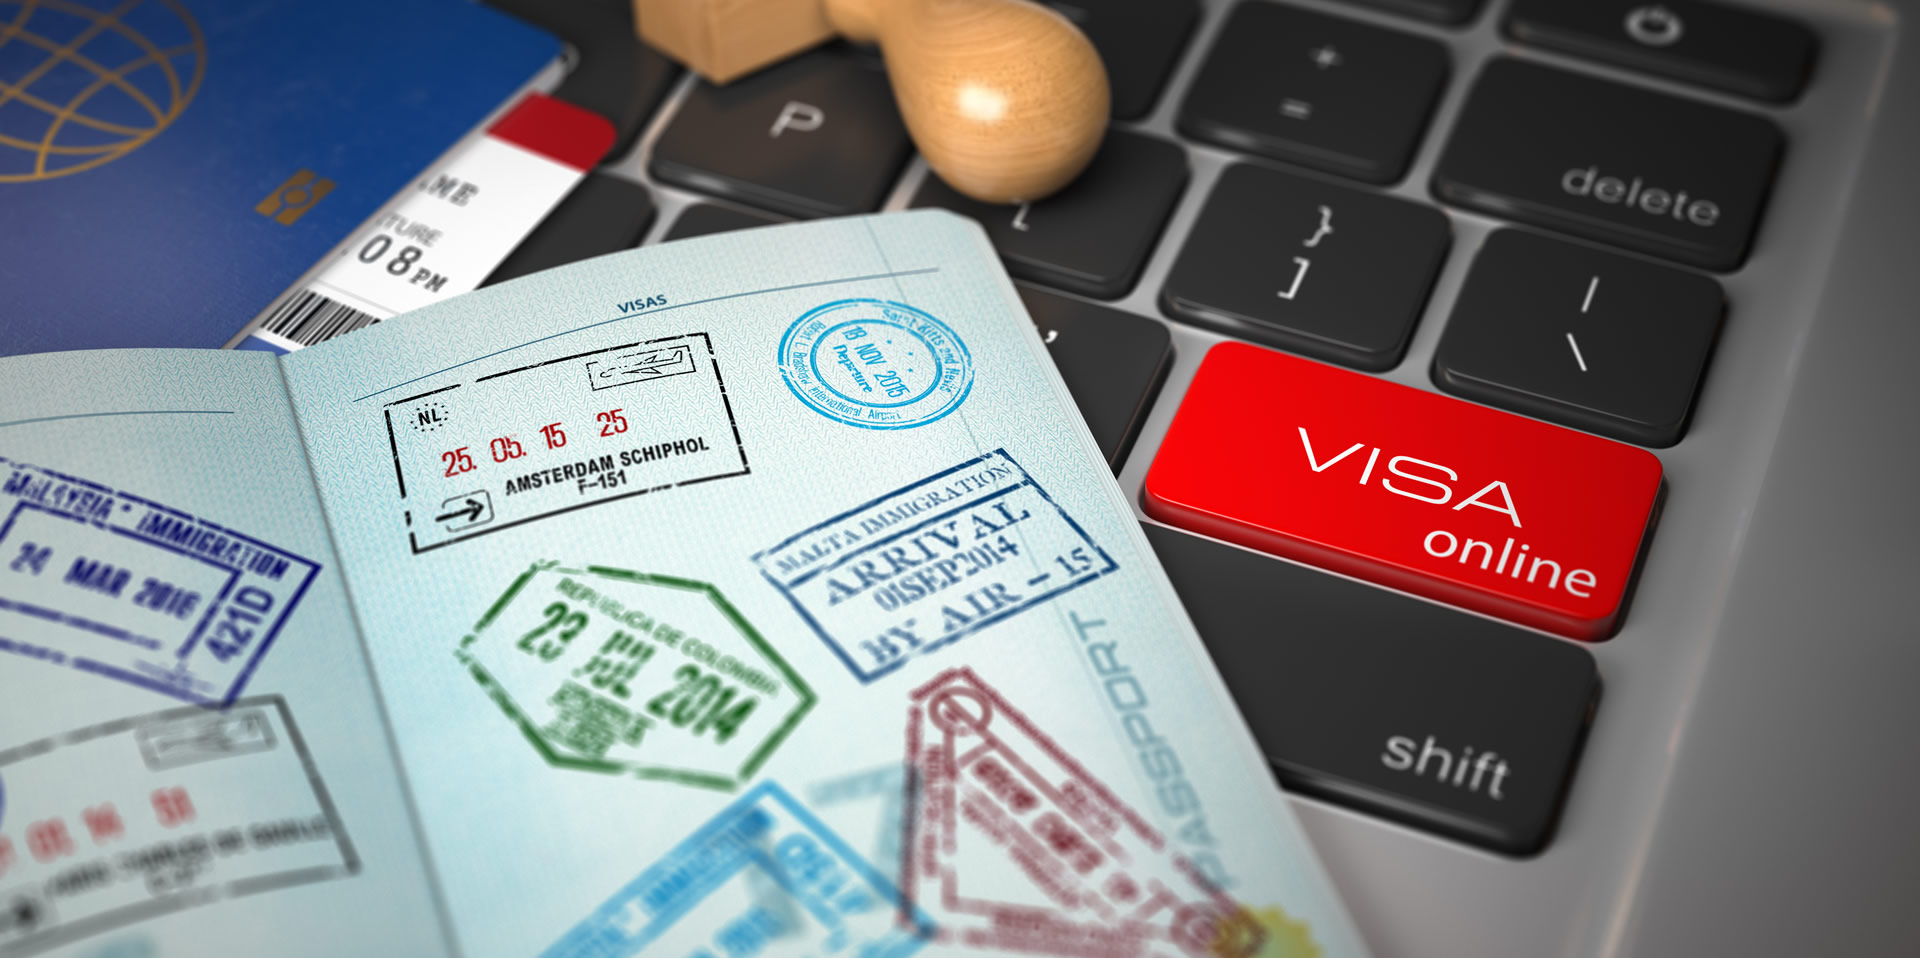 Avia Voyages Super Visa